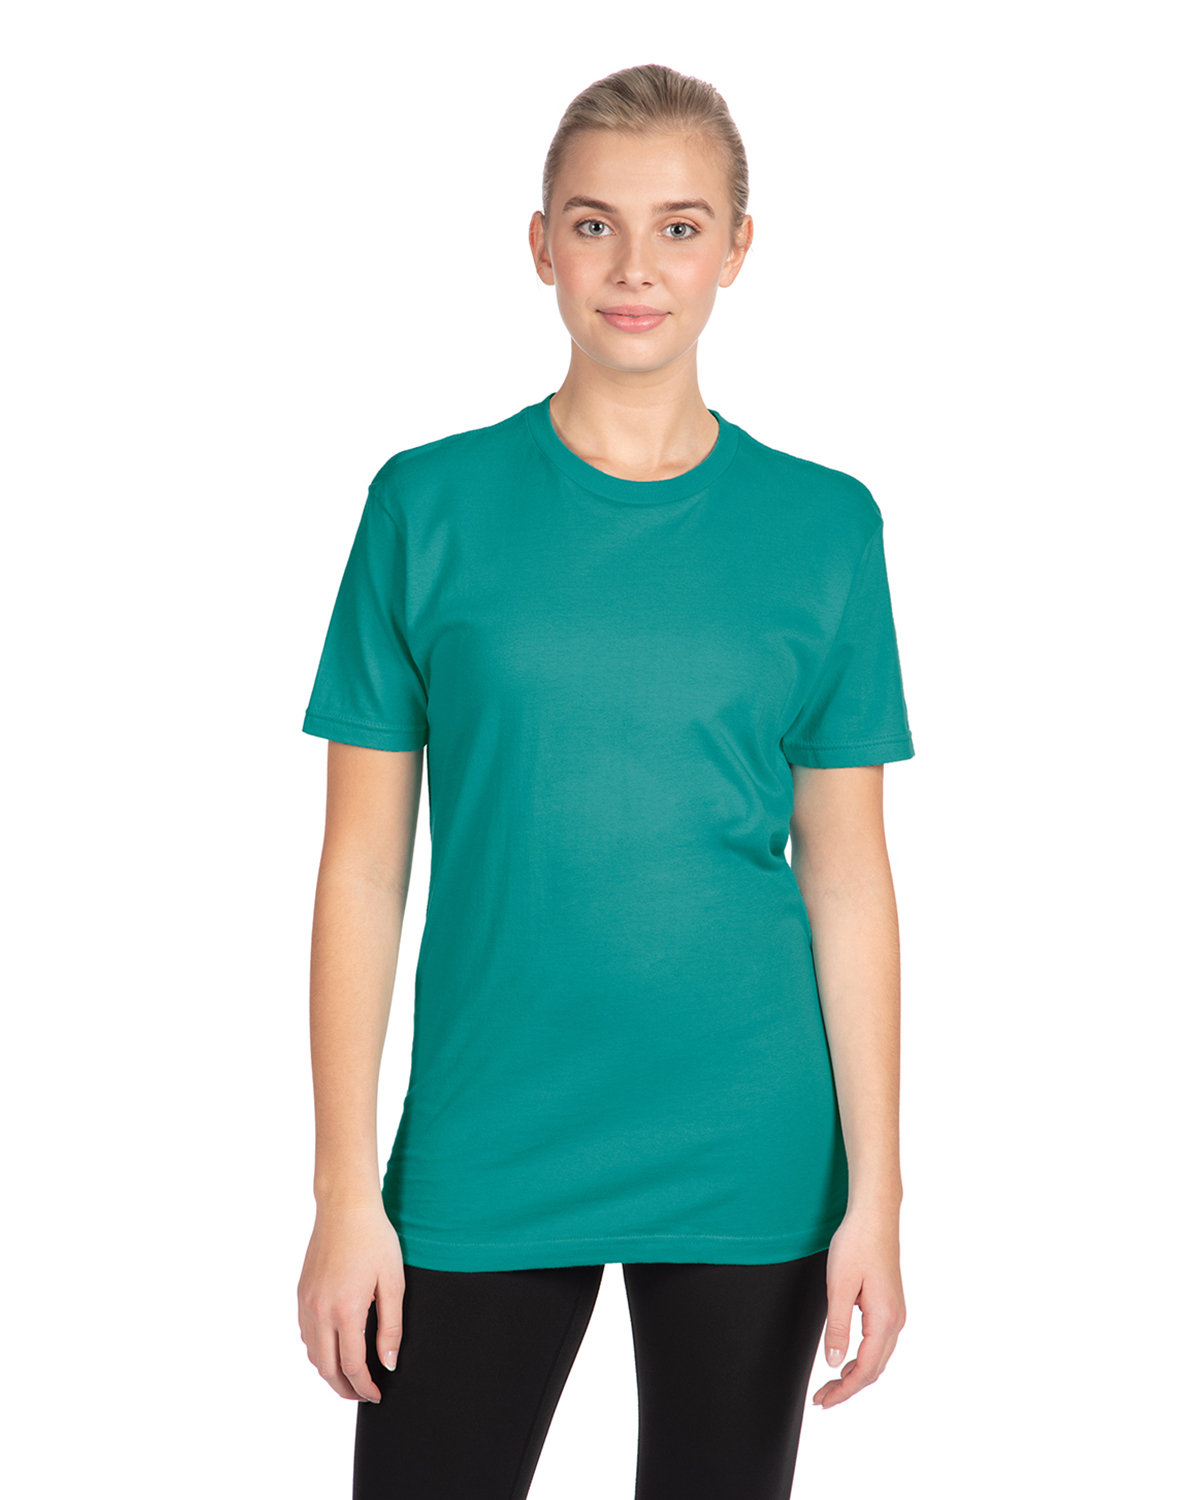 Next Level Apparel Unisex Cotton T-Shirt TEAL 